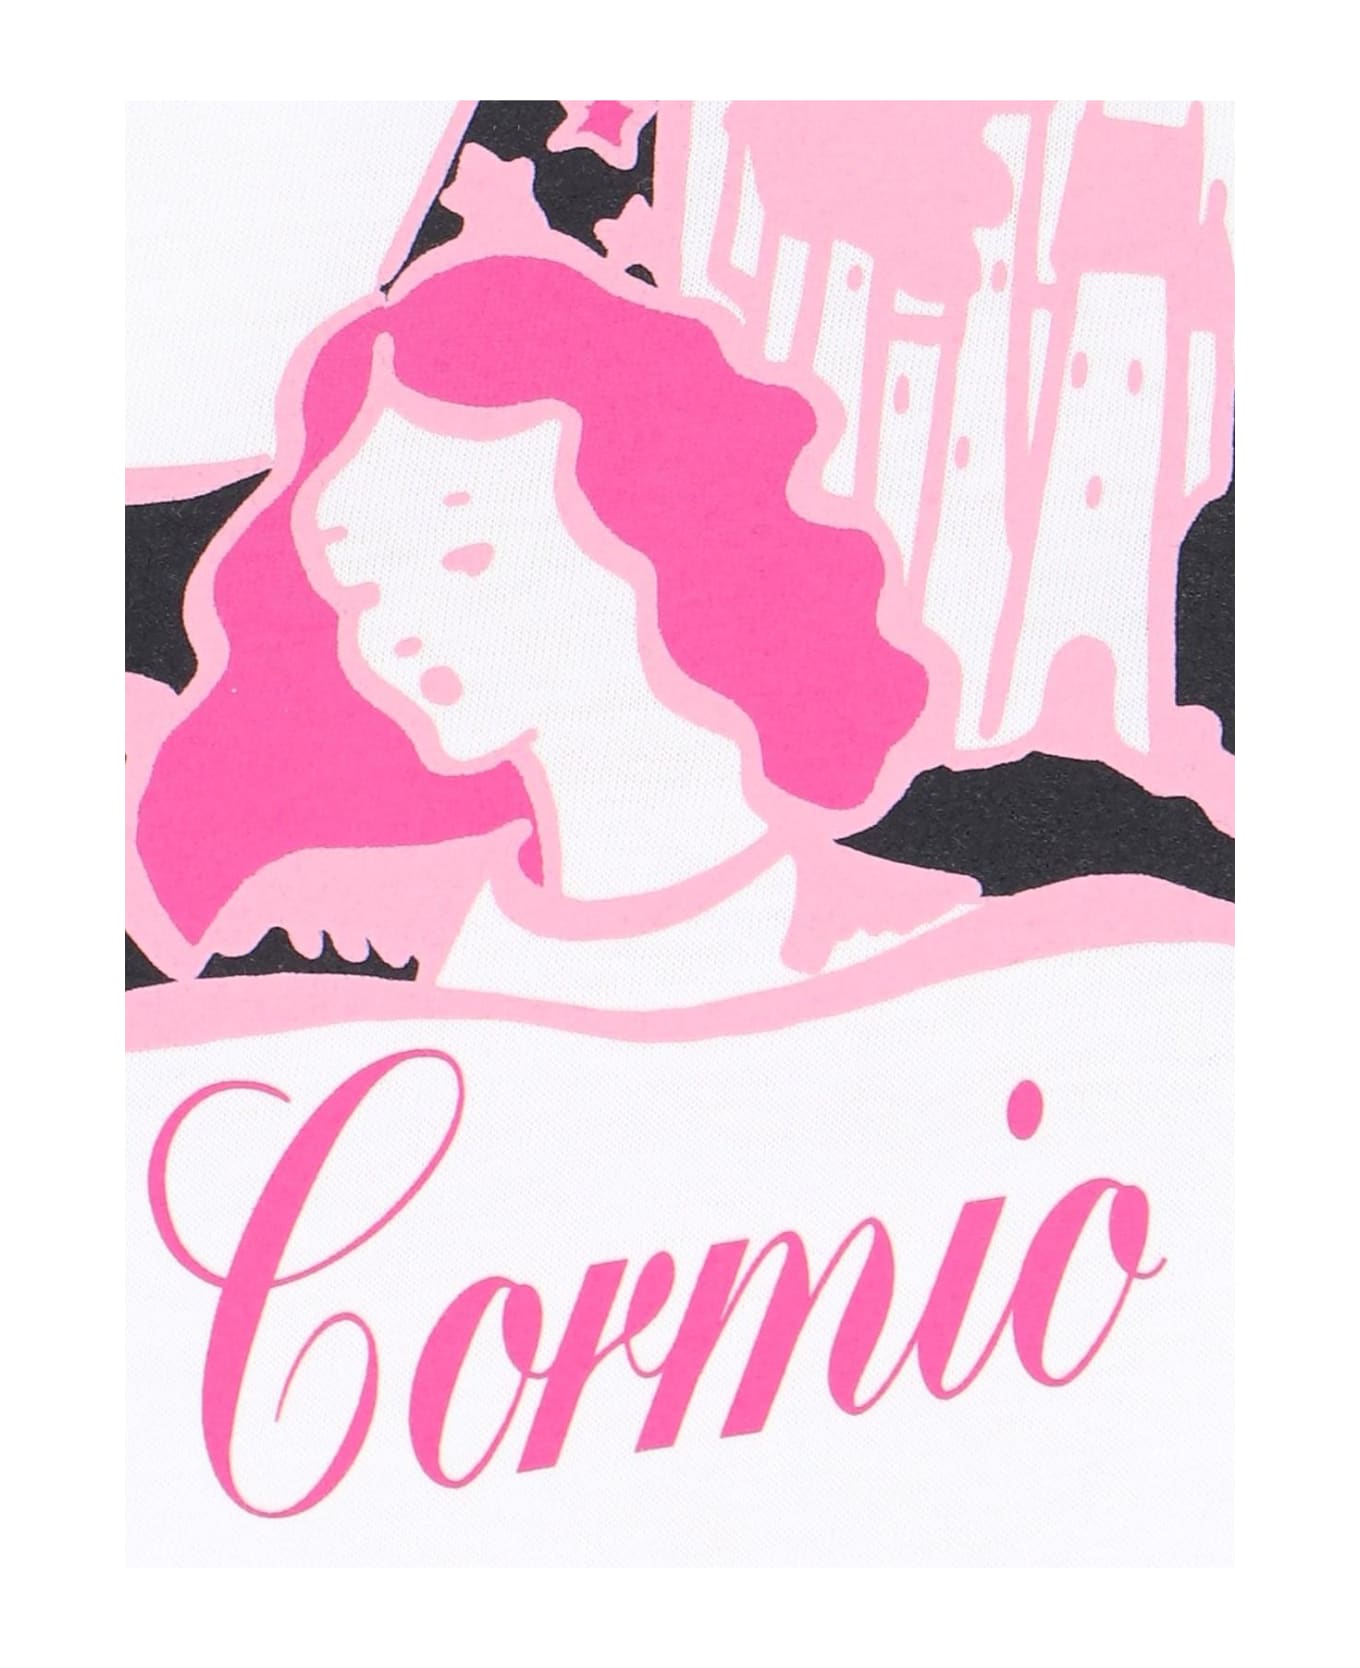 Cormio 'fairy Godmother' T-shirt - White